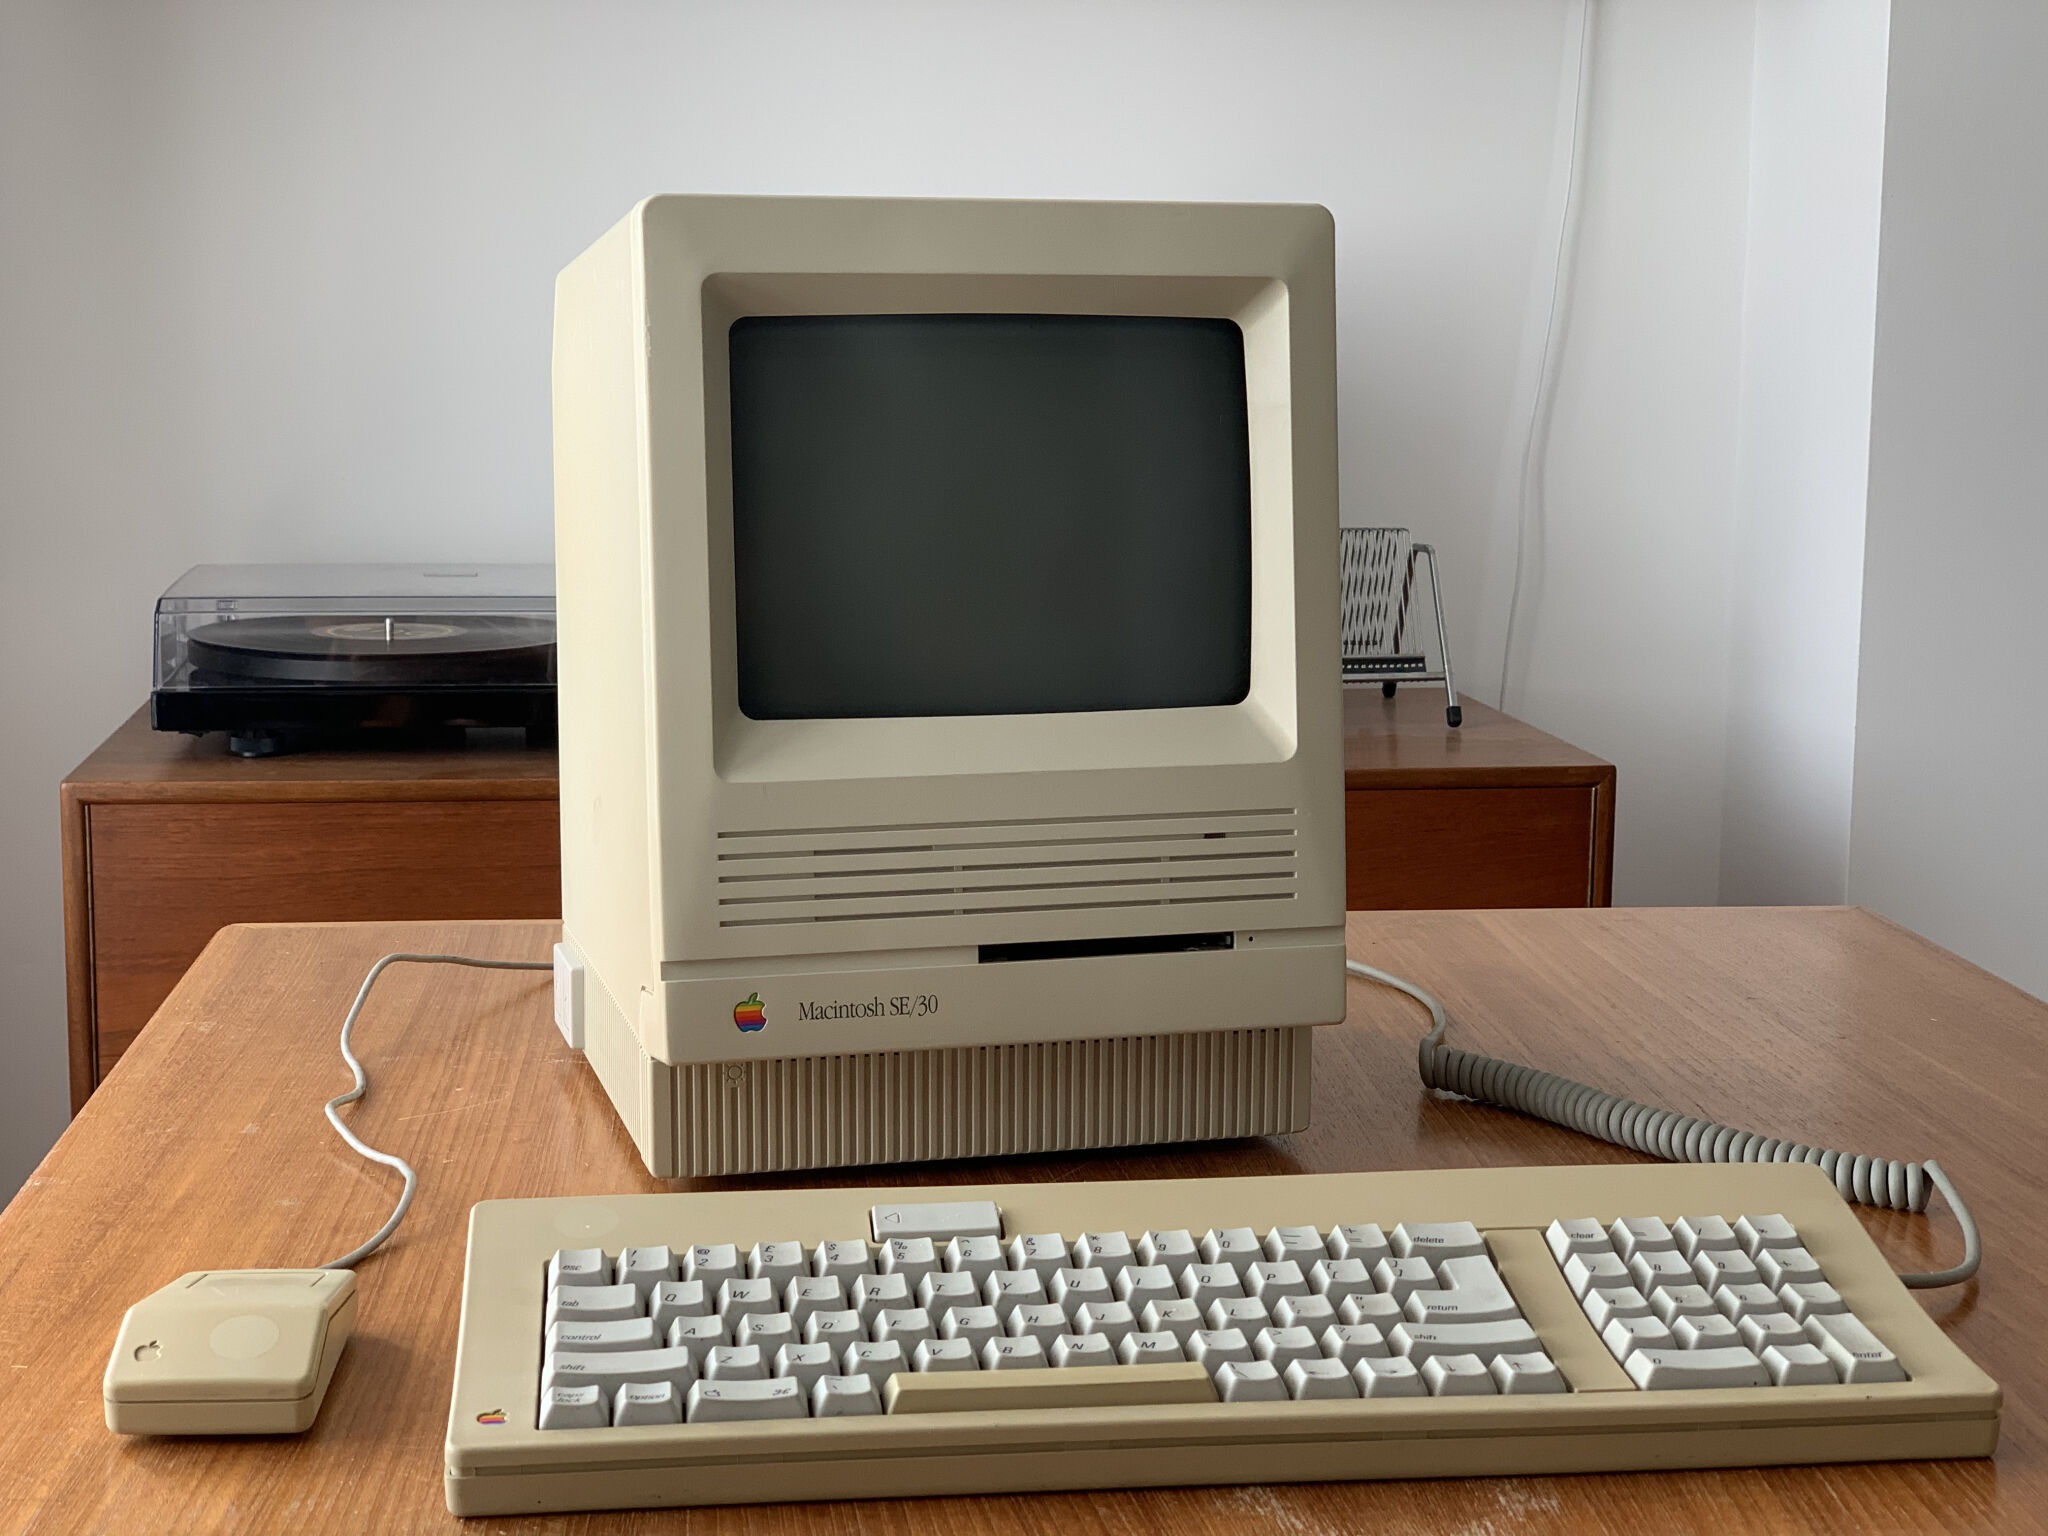  The beautiful Macintosh SE/30